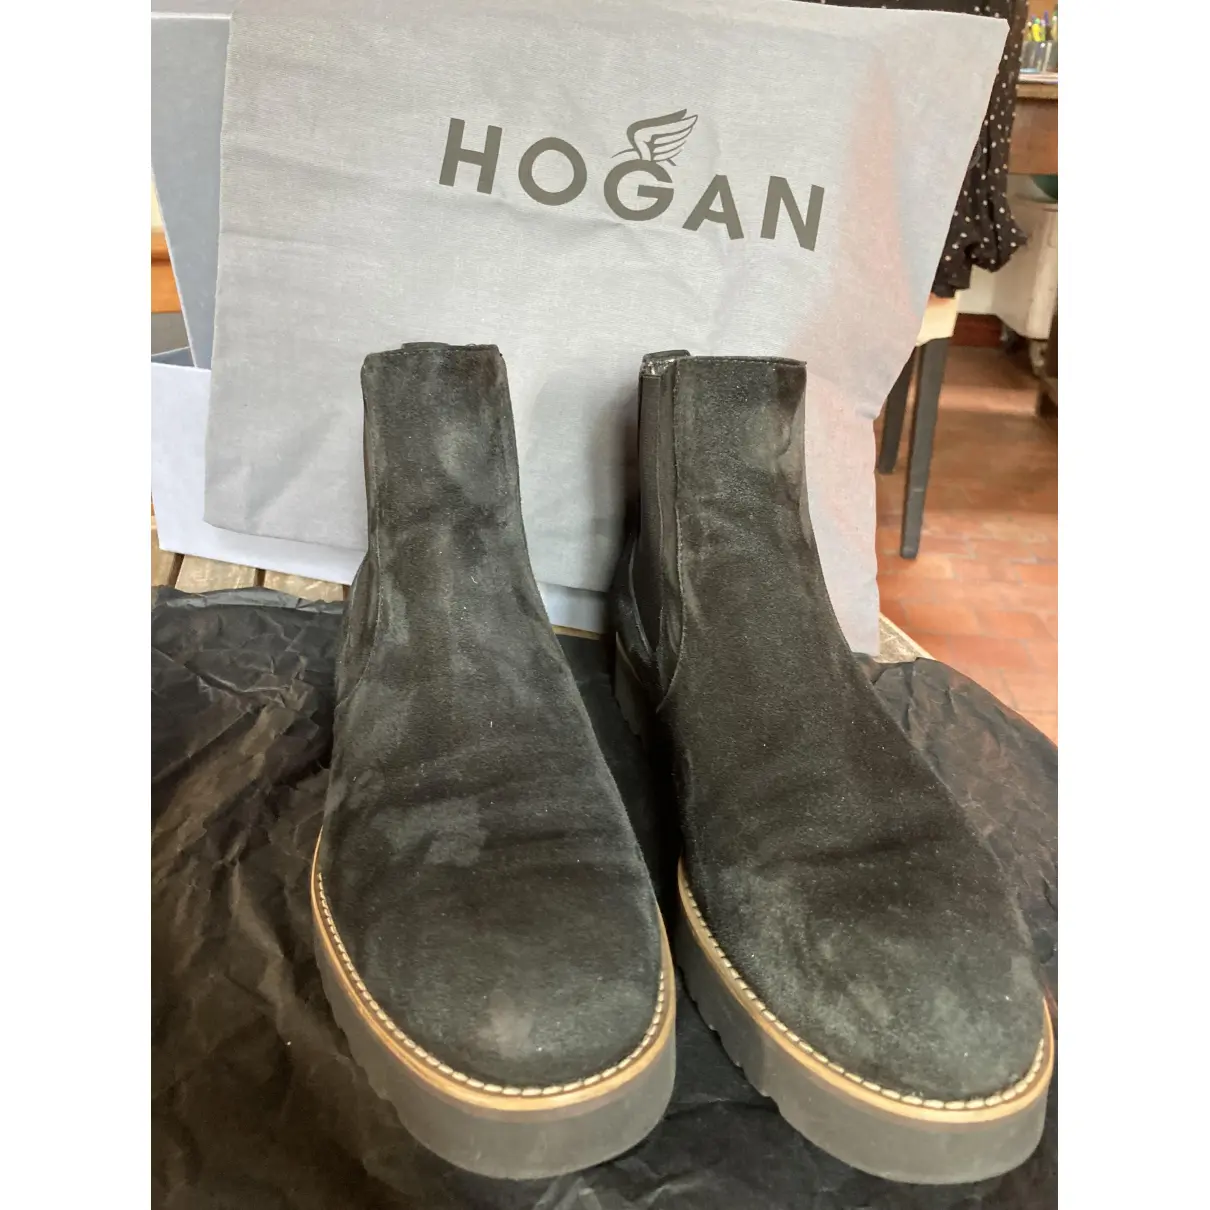 Buy Hogan Ankle boots online